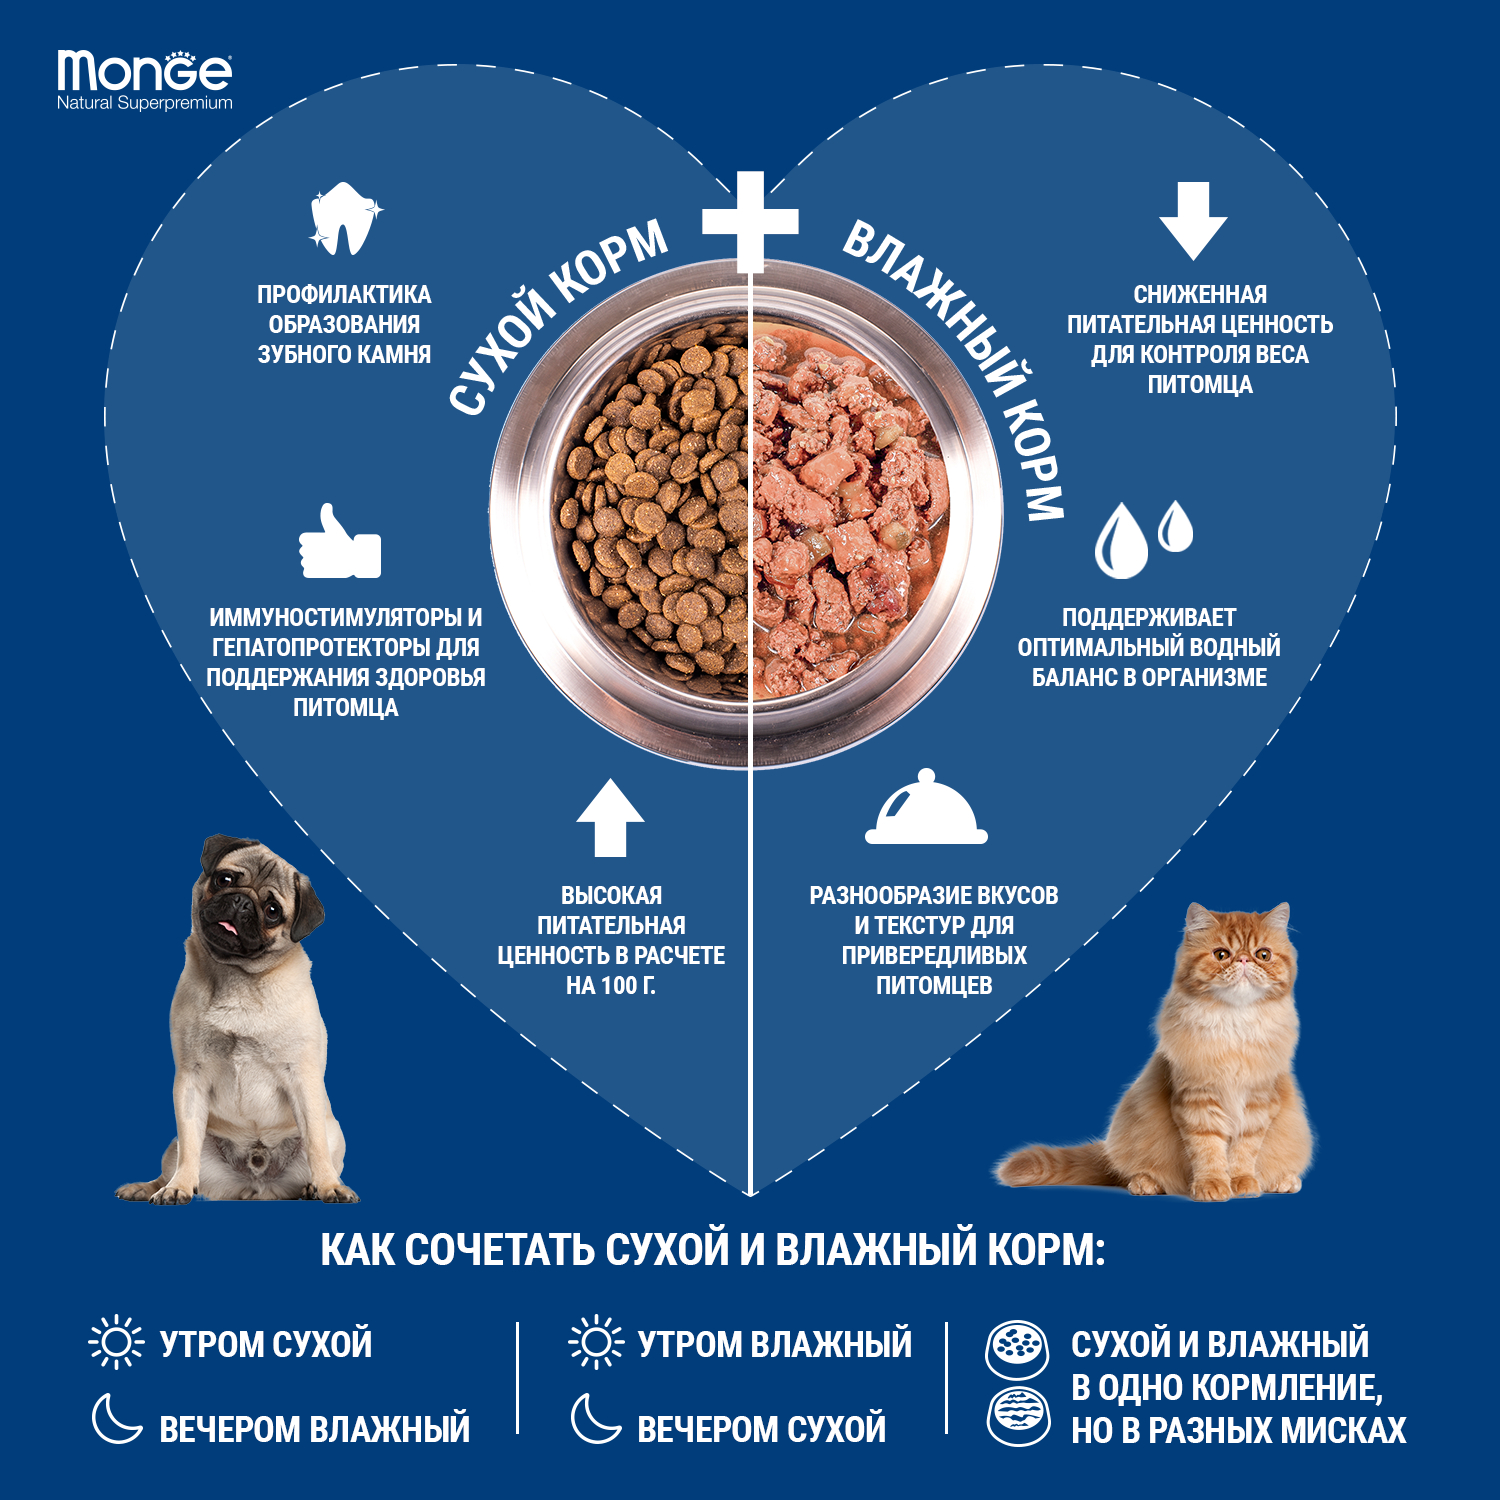 Сухой корм Monge Cat Speciality Line Monoprotein Sterilised для стерилизованных кошек, из форели 10 кг